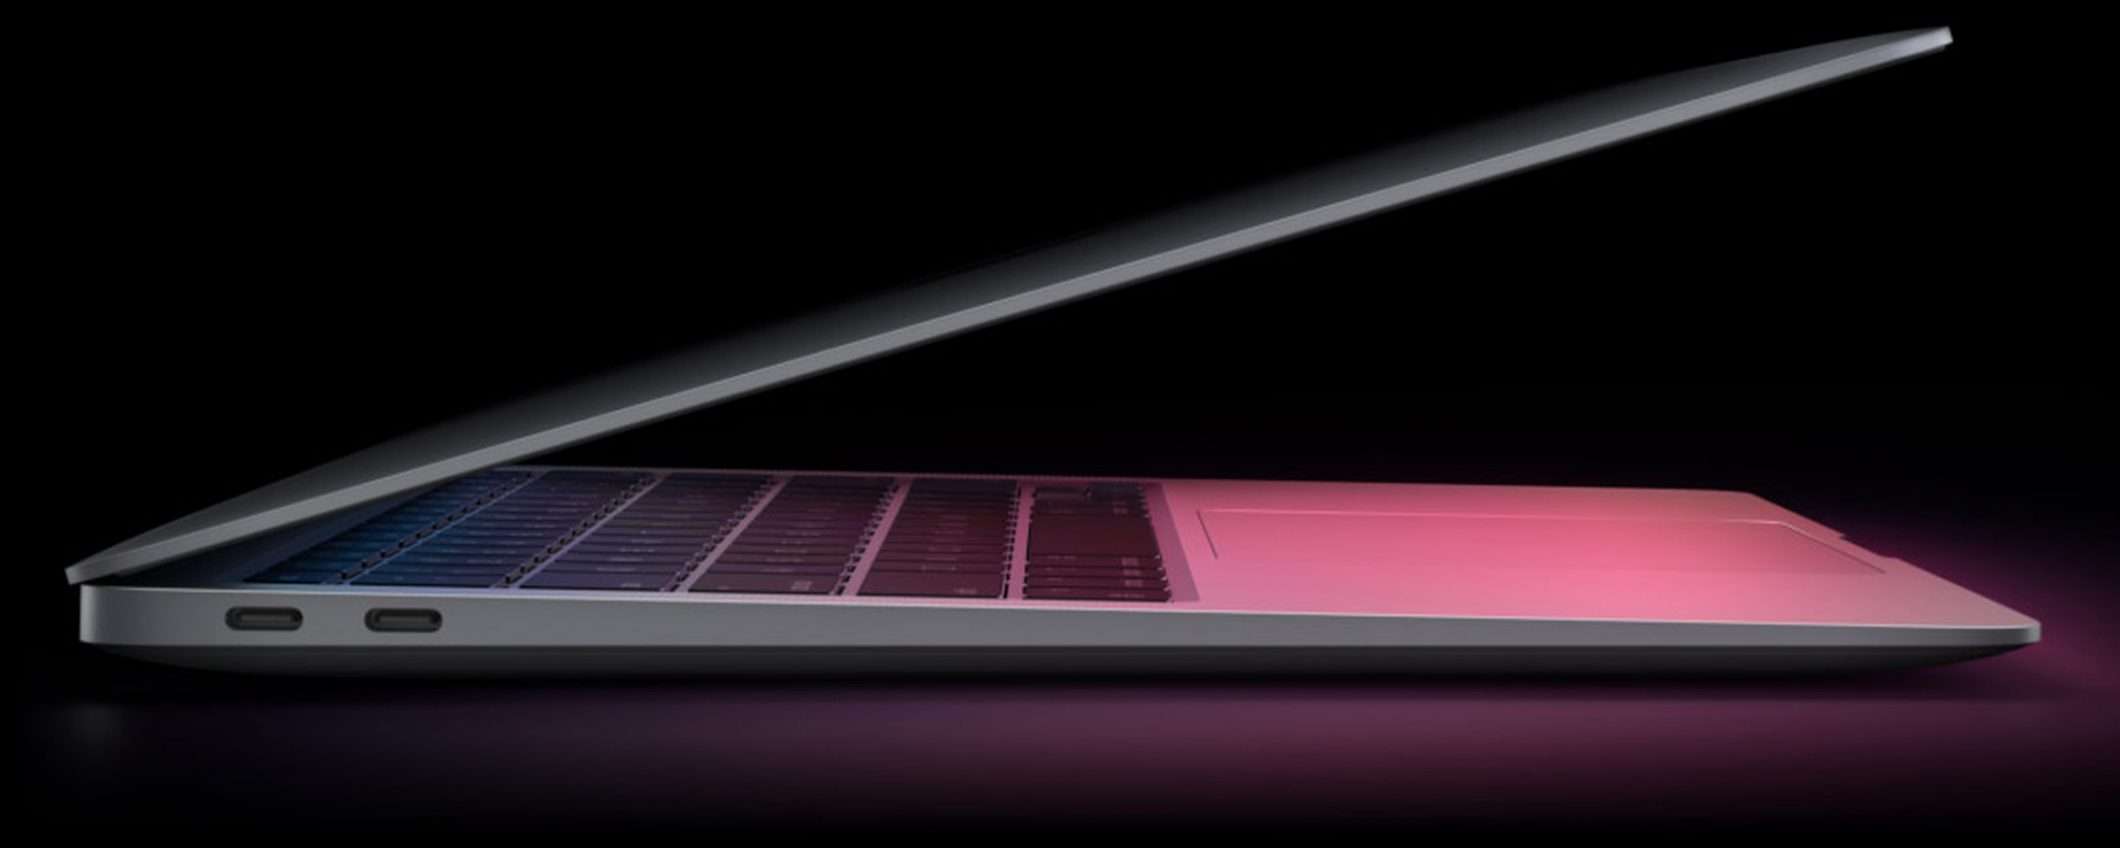 MacBook Air con Apple M1 a 999 euro: l'offertona